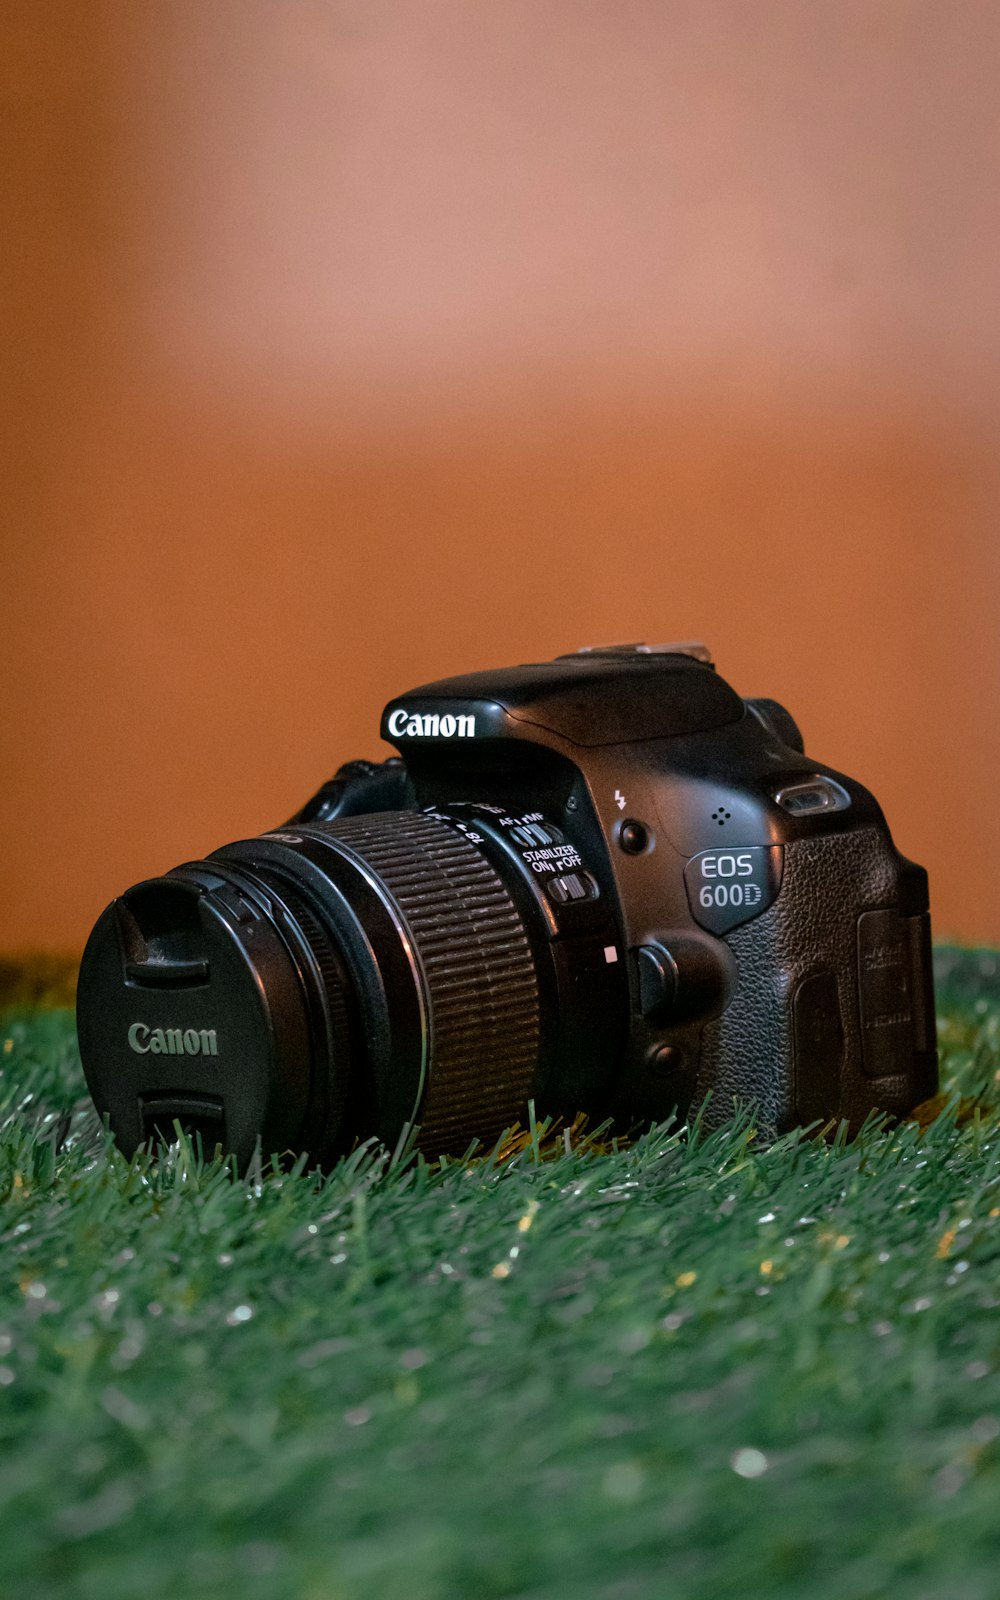 black nikon dslr camera on green grass photo – Free Camera Image on Unsplash